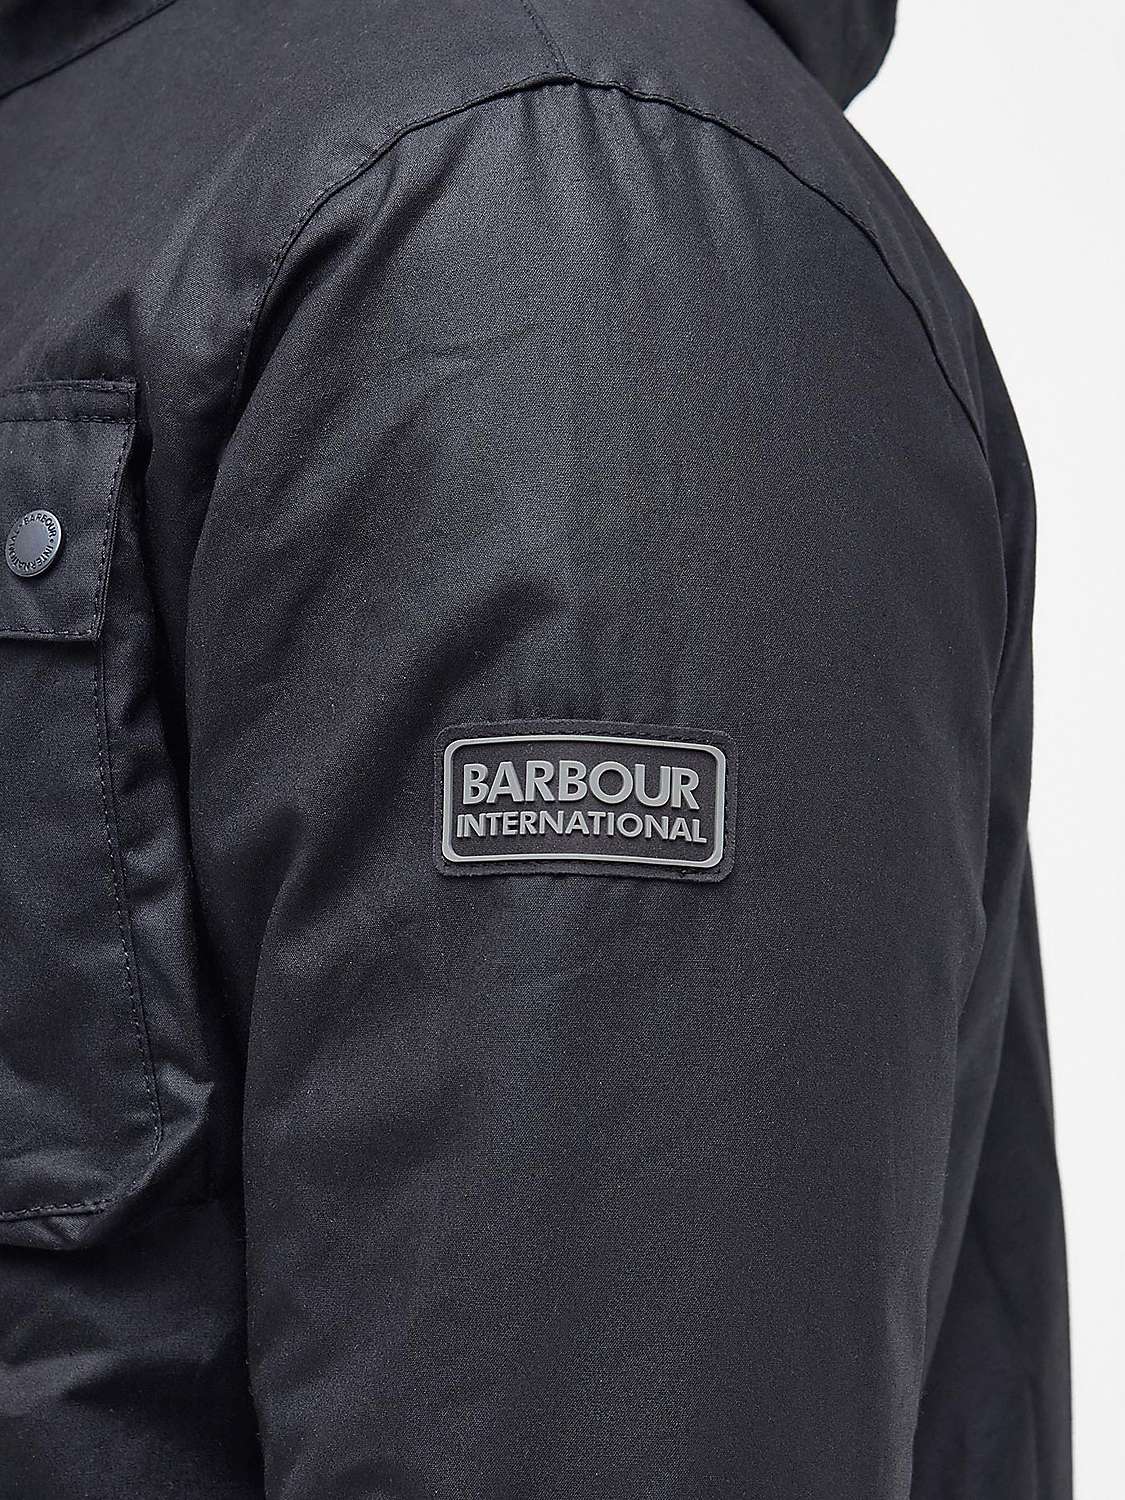 Buy Barbour International Galloway Wax Jacket, Black Online at johnlewis.com